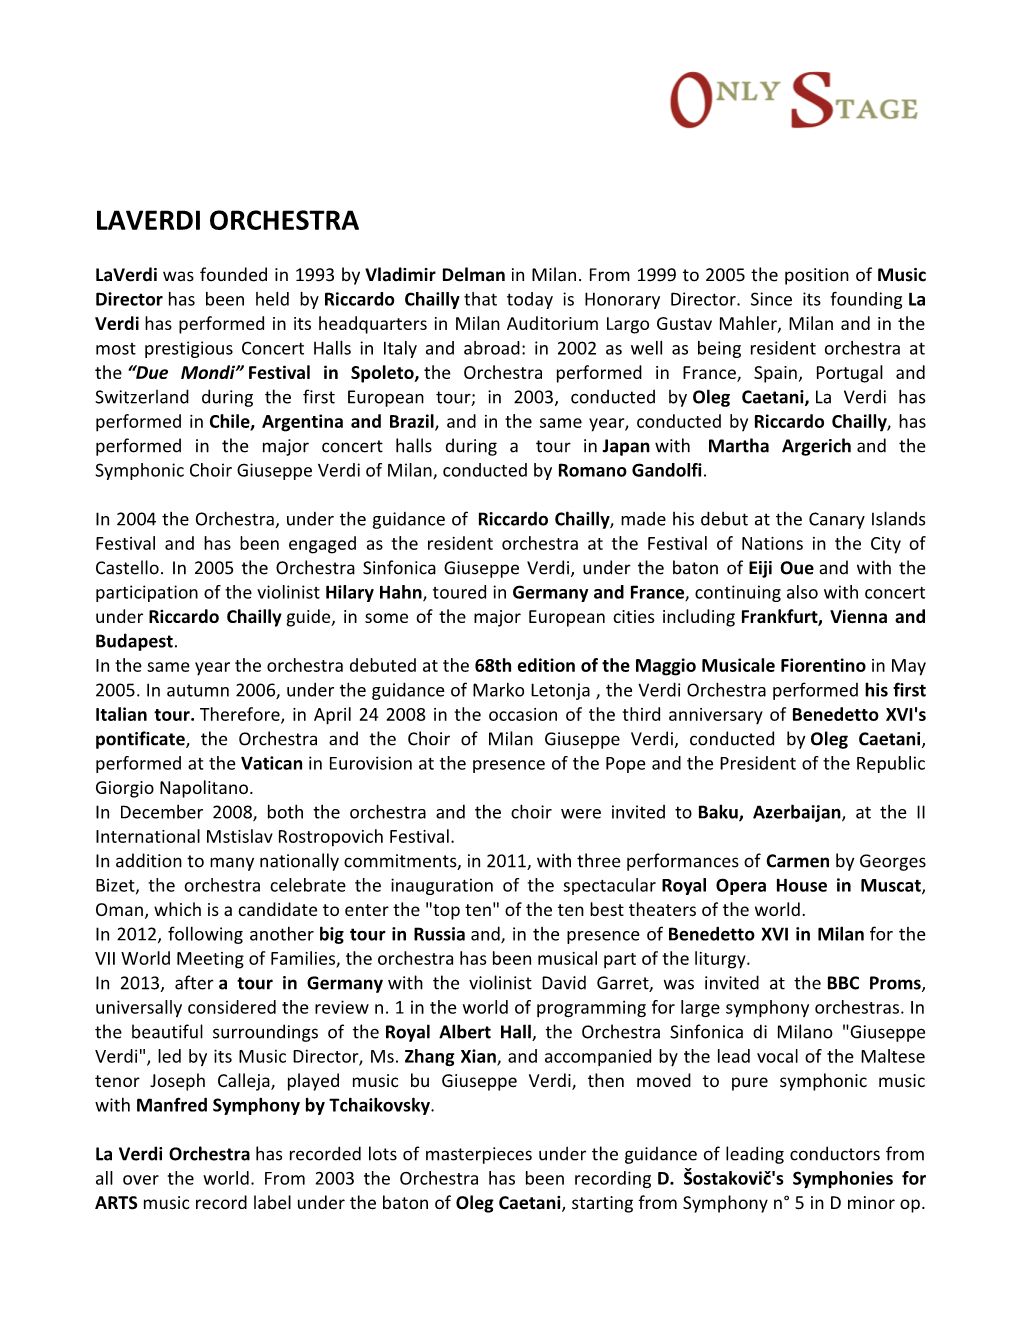 Laverdi Orchestra